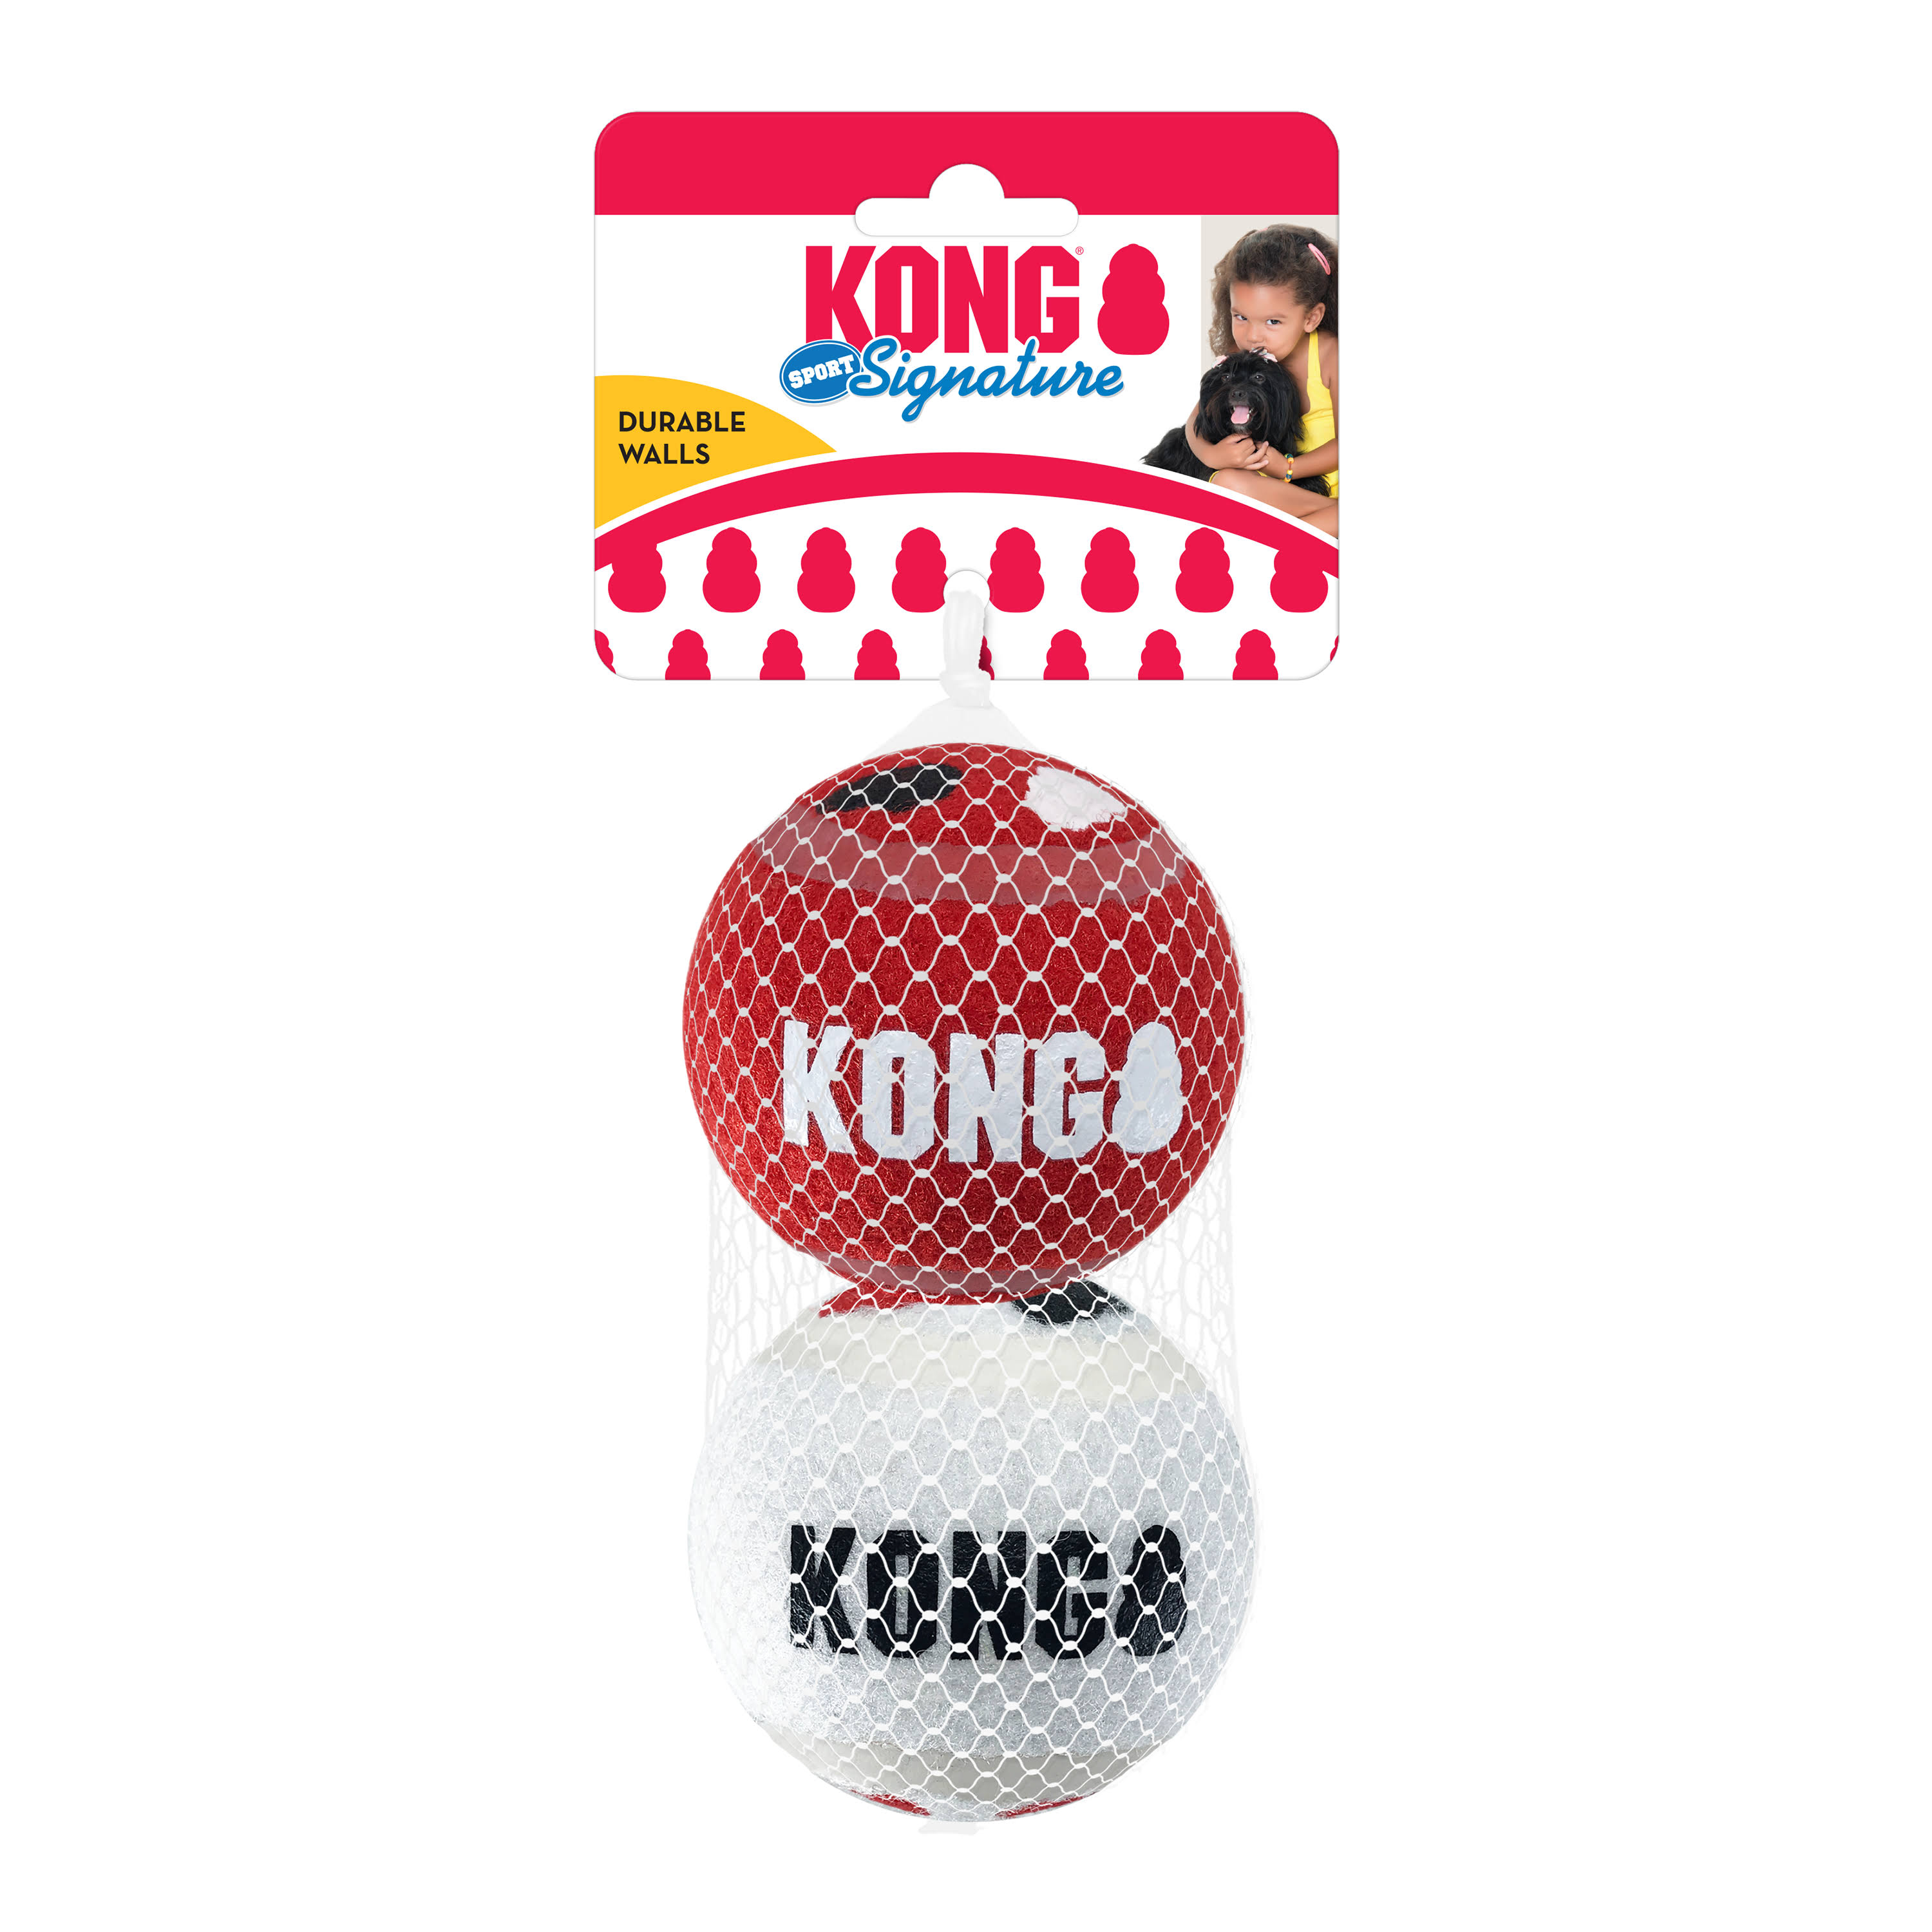 Kong Signature Sport Balls Large - 2 Pack